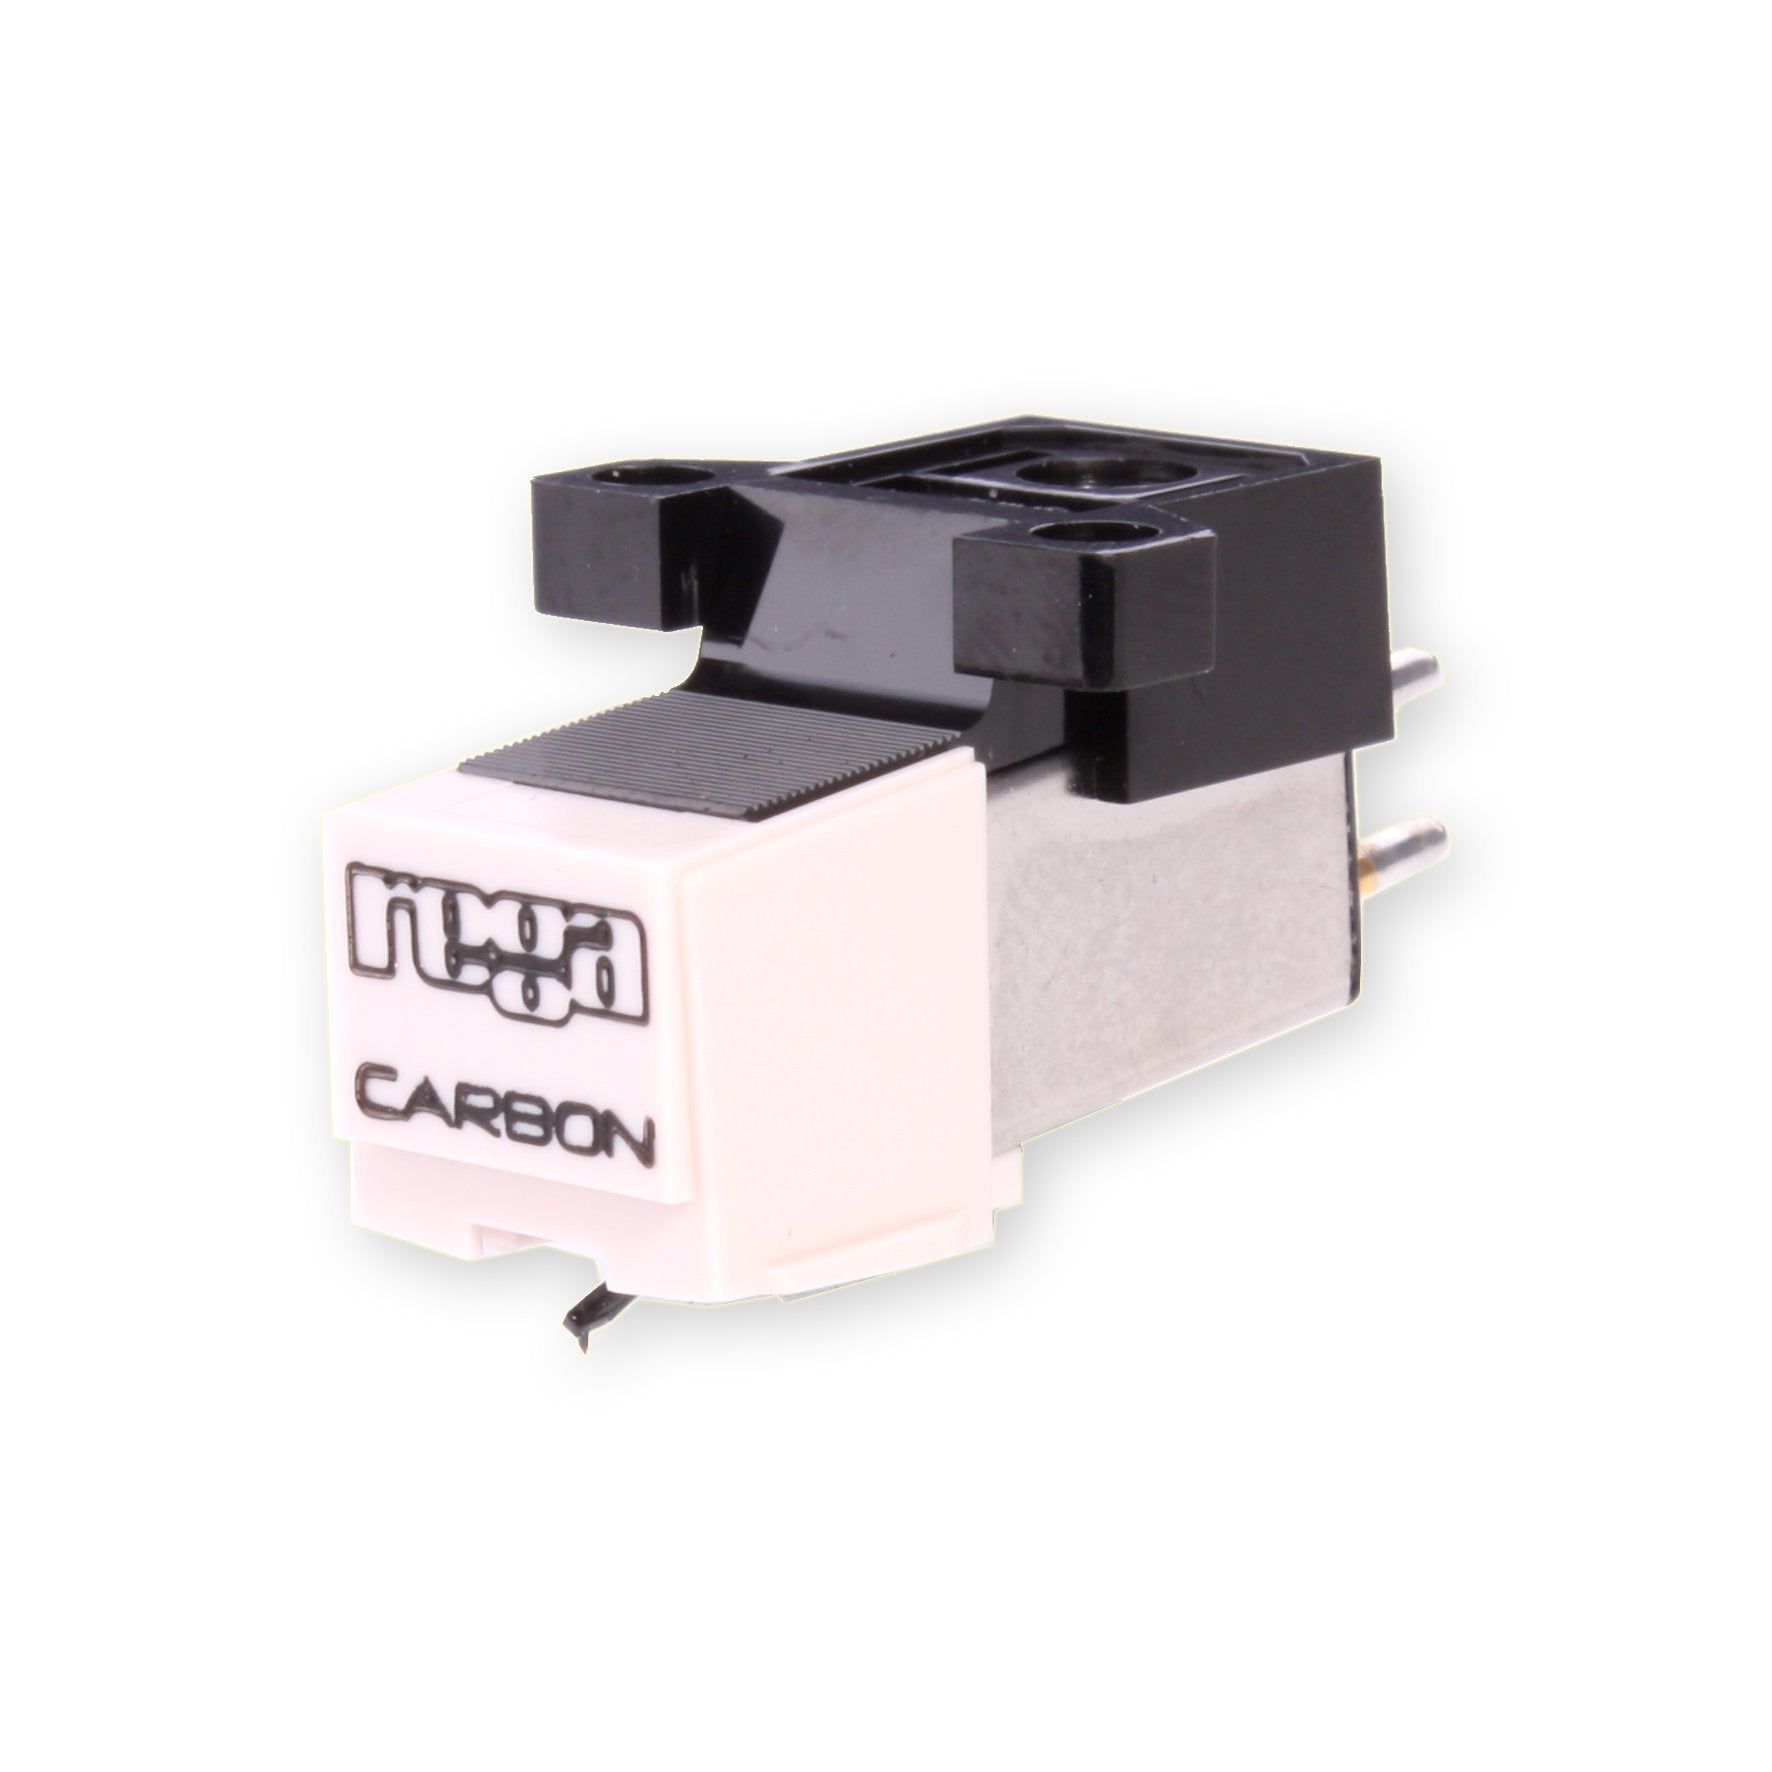 Rega - Carbon MM - Turntable Cartridge New Zealand